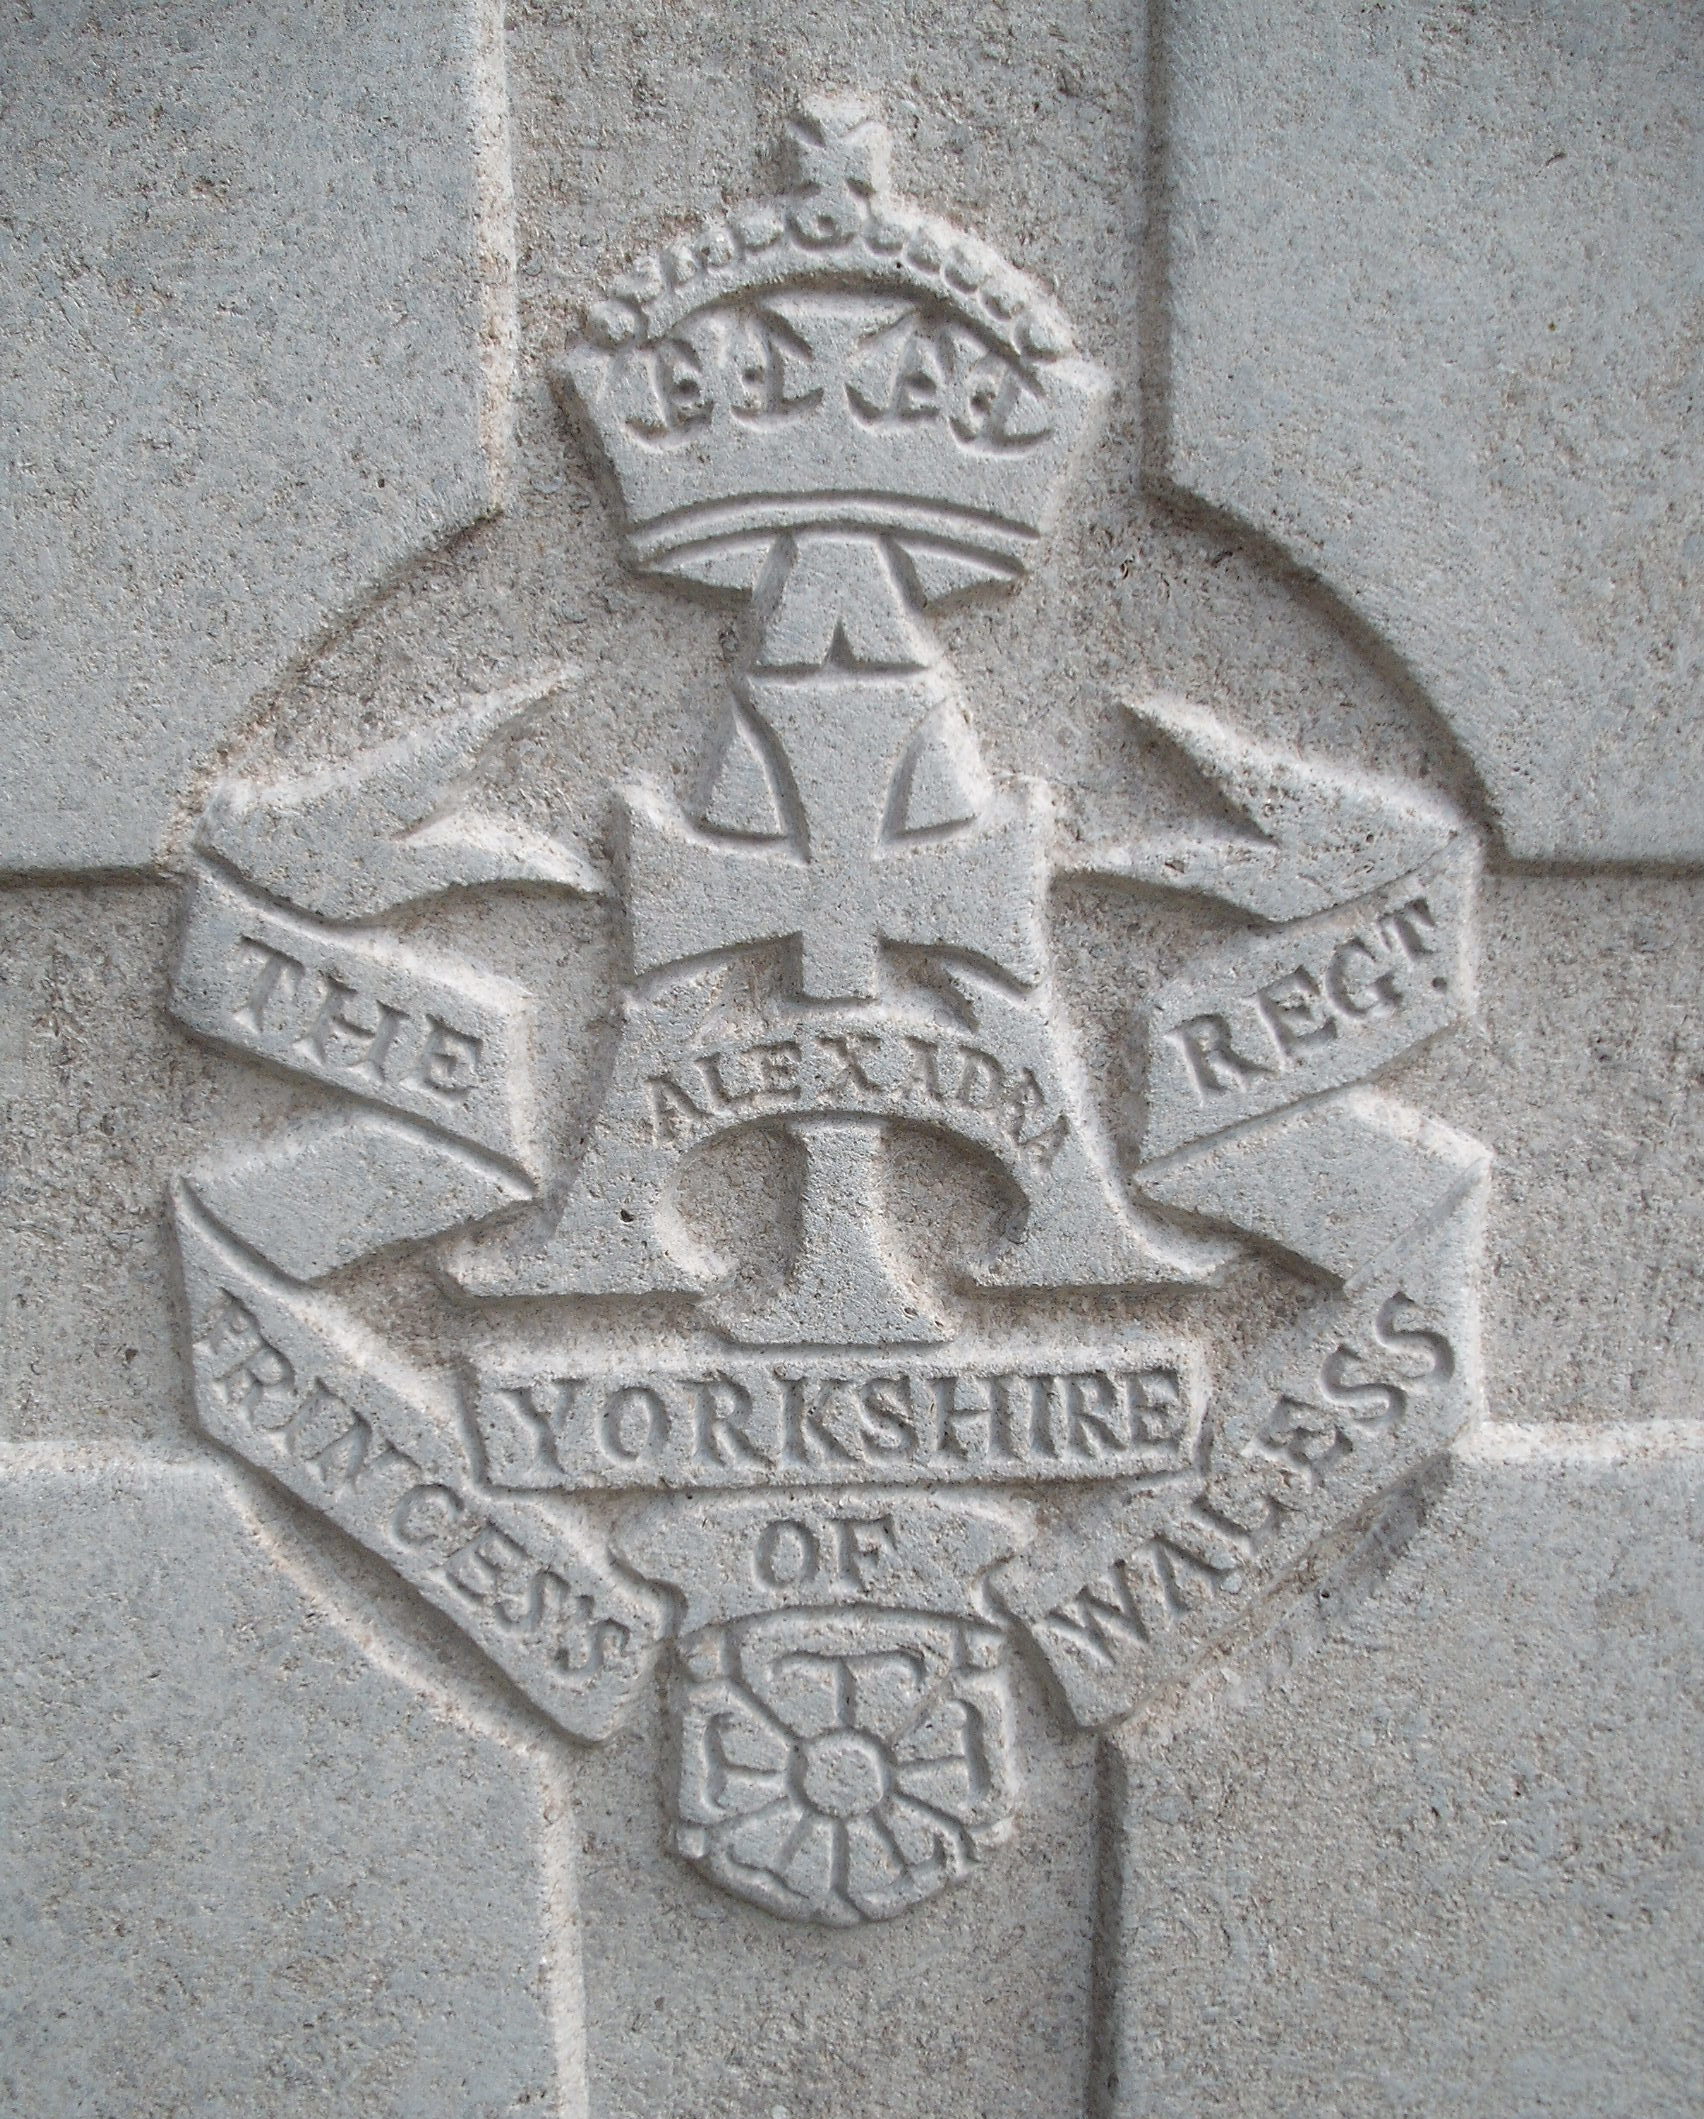 Capbadge of the Yorkshire Regiment